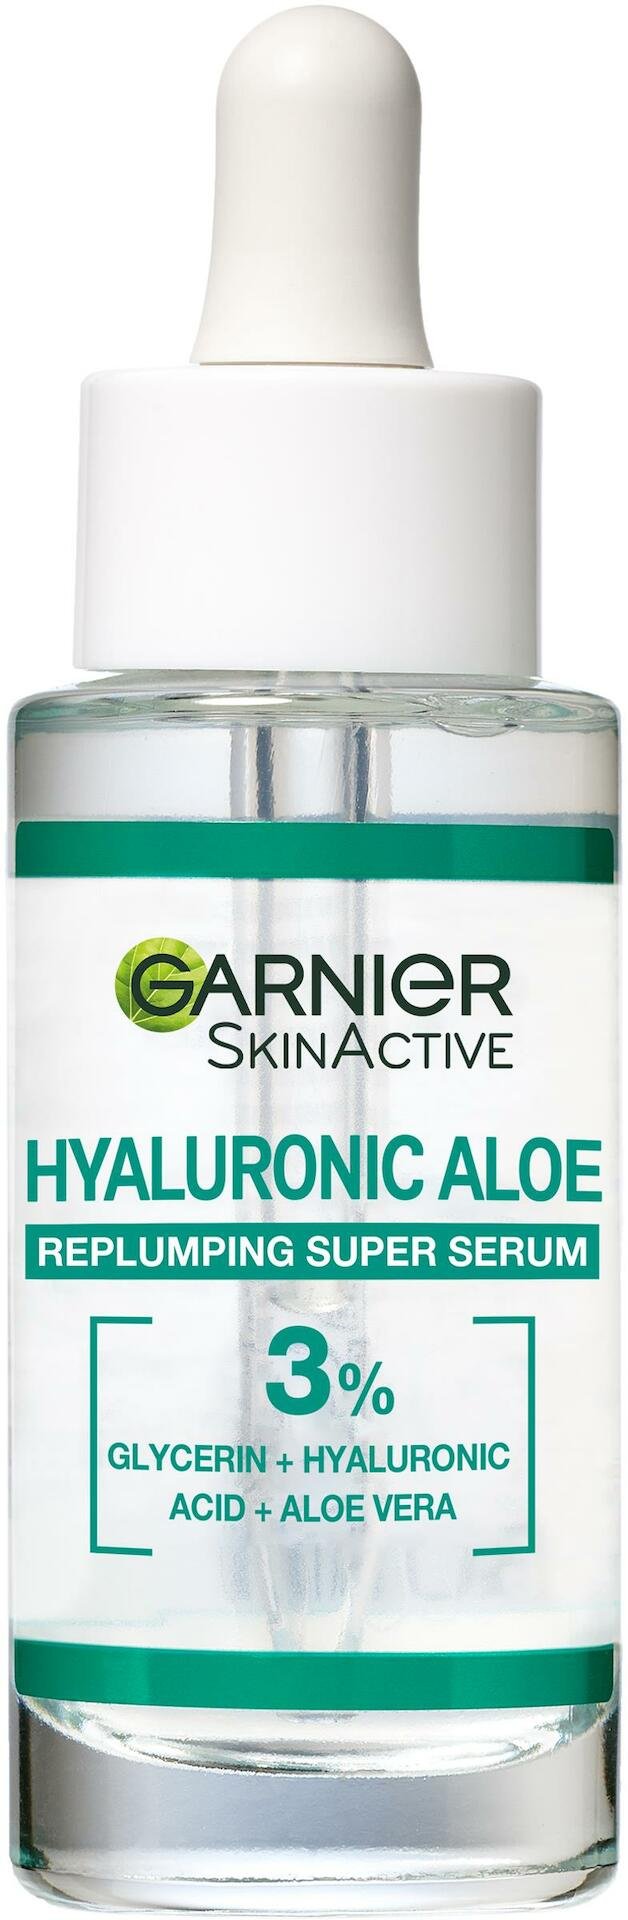 Garnier Skin Active Hyaluronic Aloe Replumping Super Serum